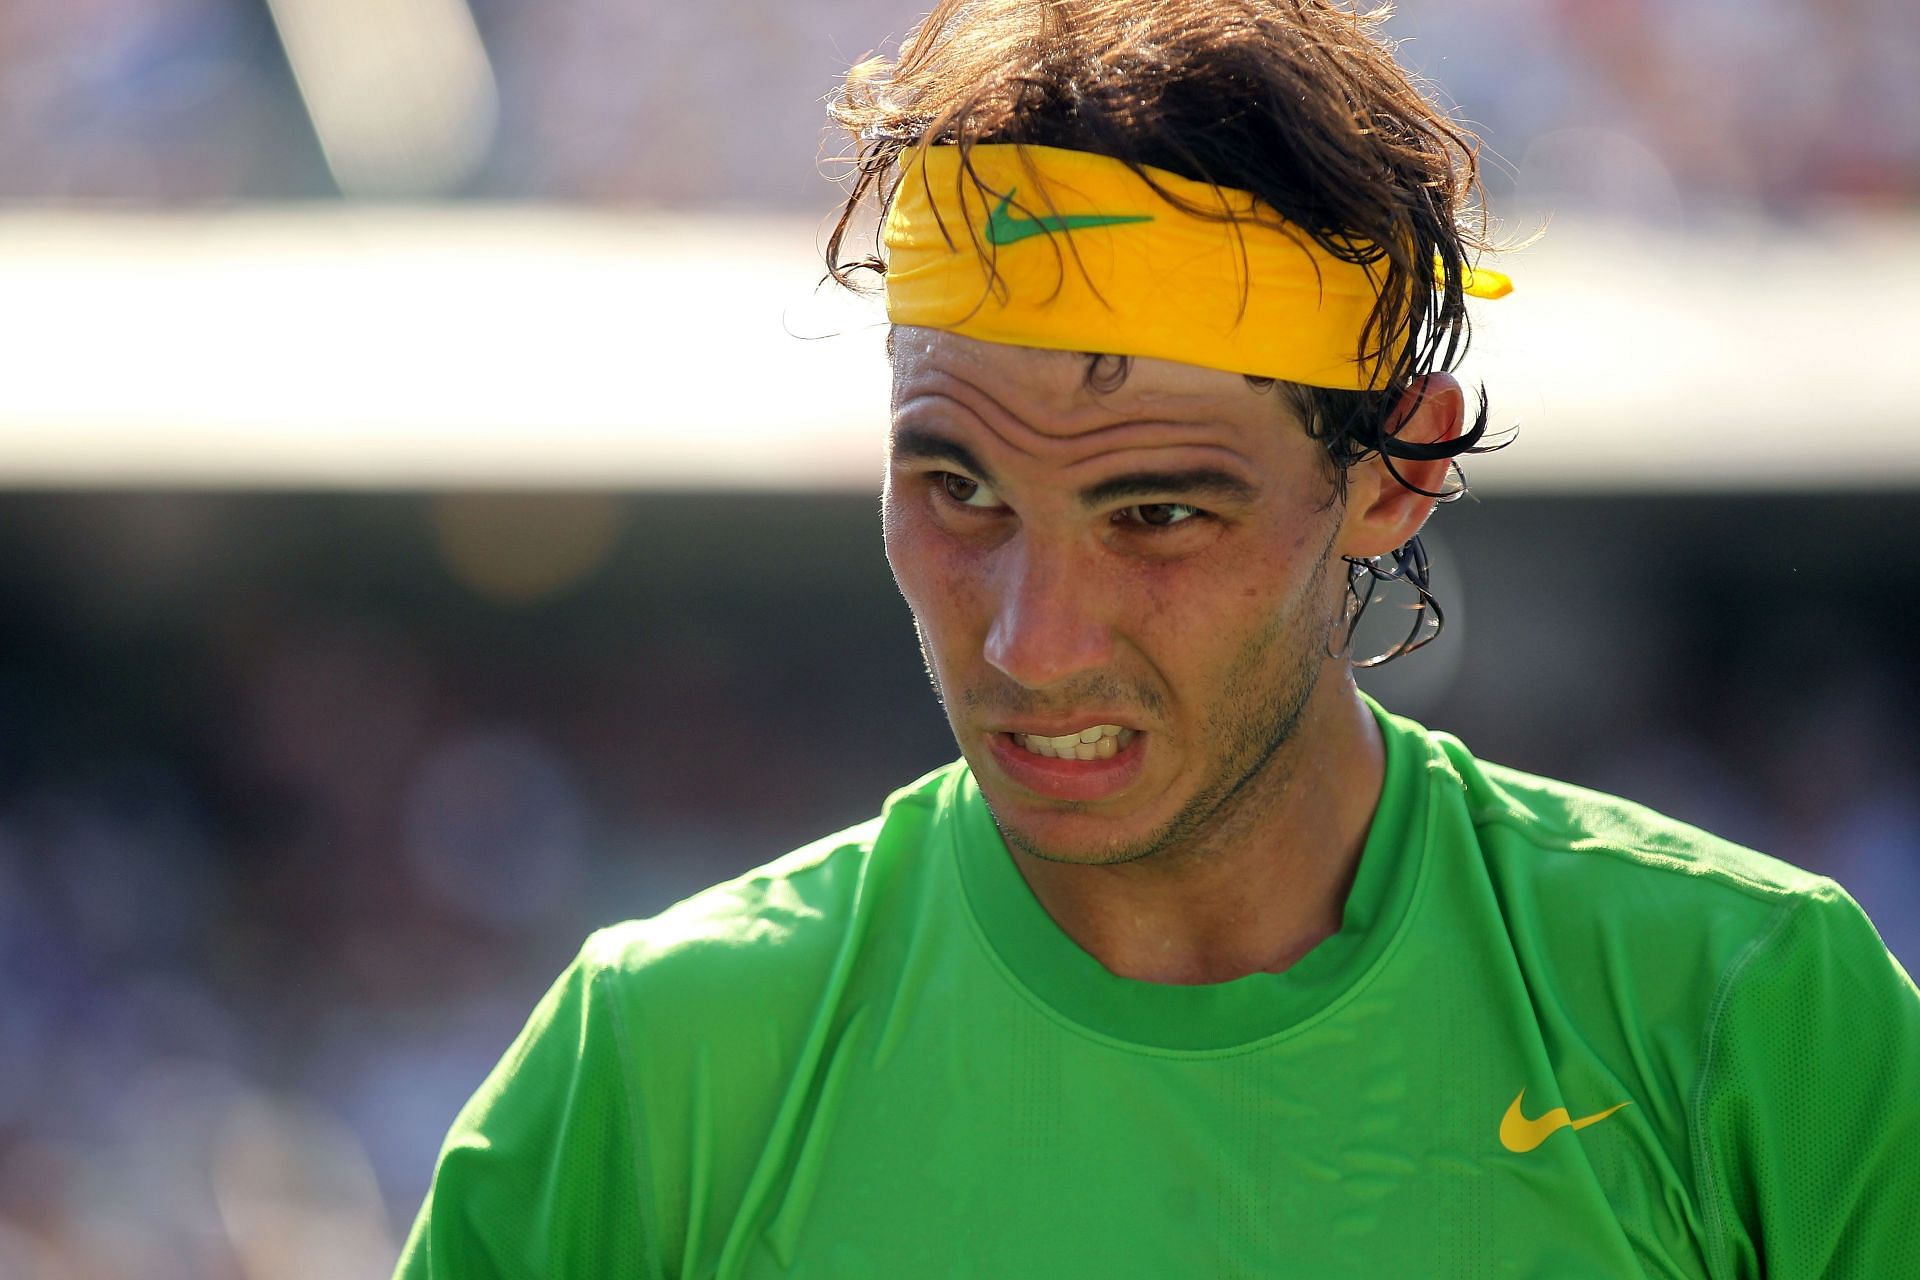 Rafael Nadal lost to Novak Djokovic in the final of the 2011 Miami Open